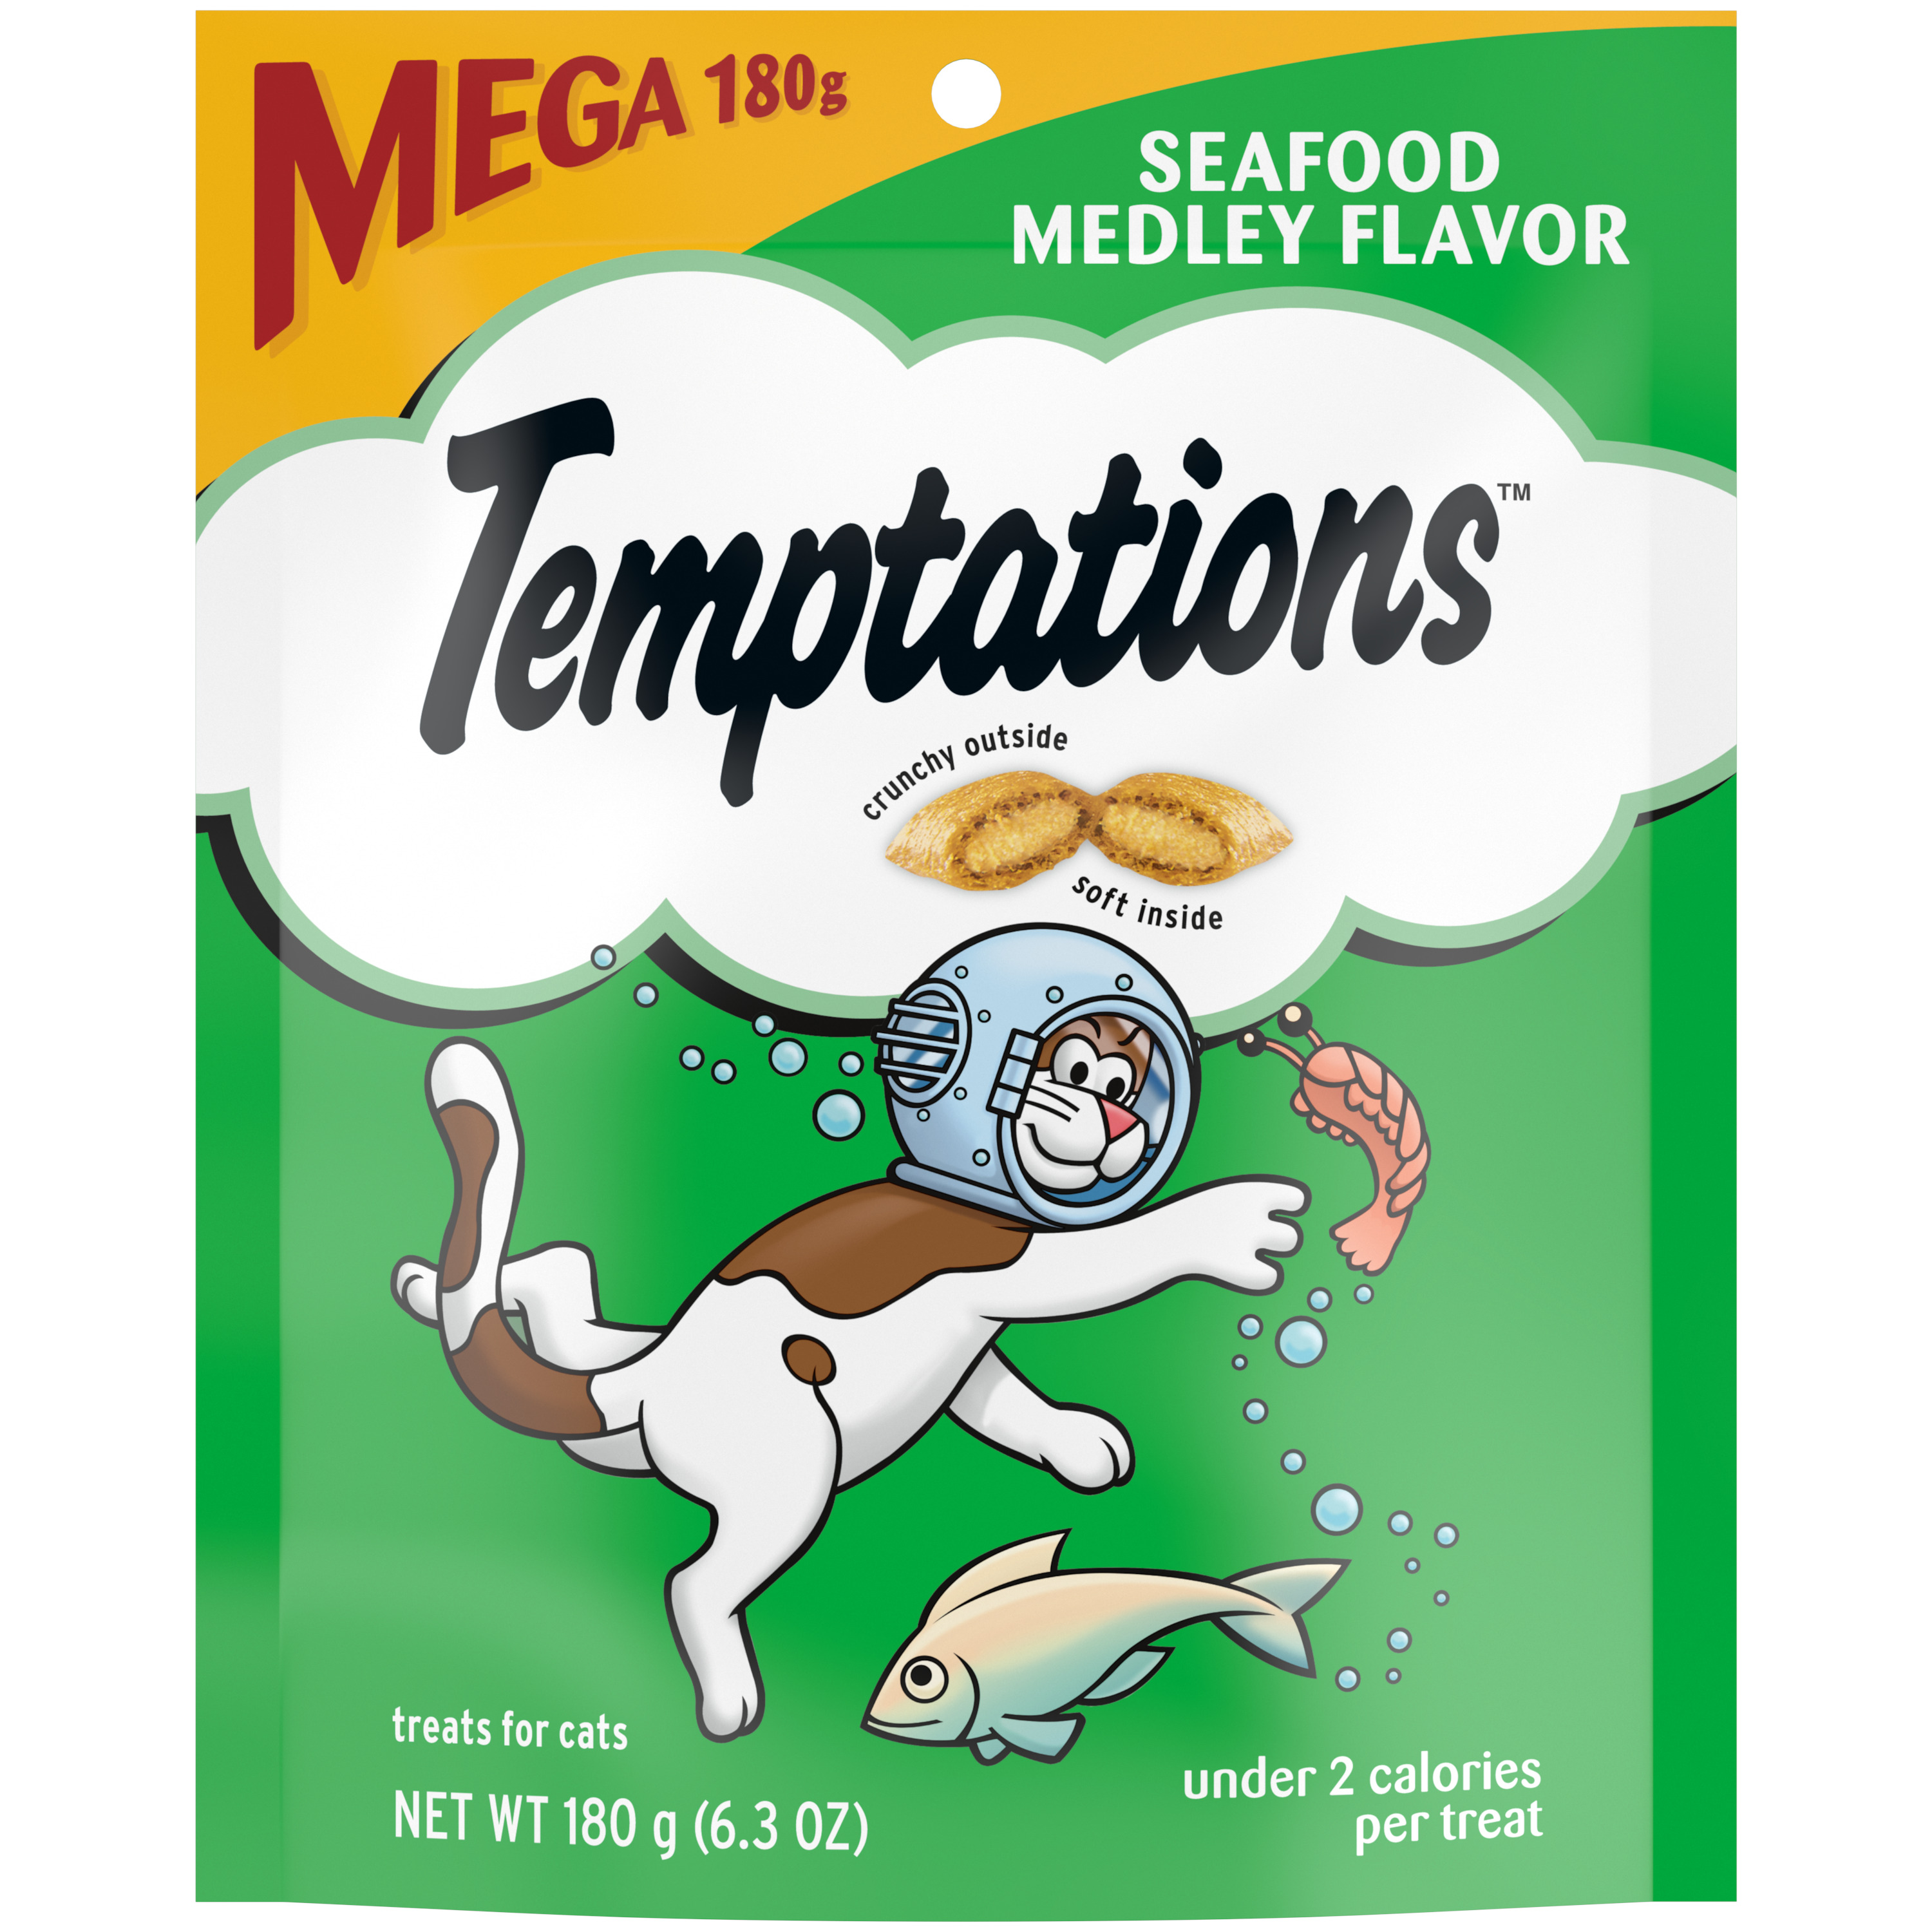 6.35 oz. Whiskas Temptations Seafood Medley - Health/First Aid